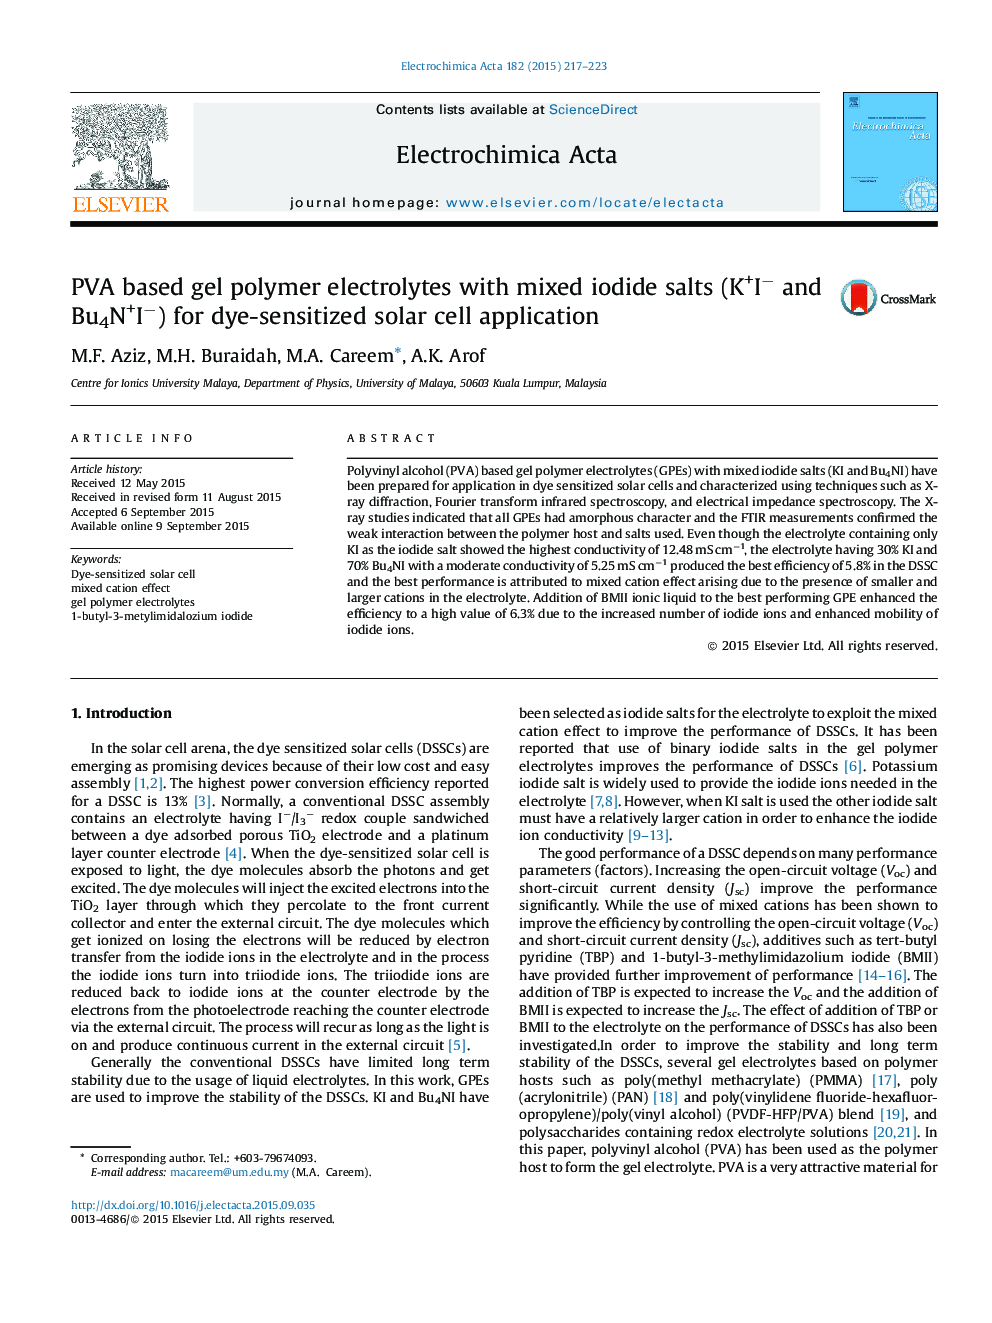 PVA based gel polymer electrolytes with mixed iodide salts (K+Iâ and Bu4N+Iâ) for dye-sensitized solar cell application